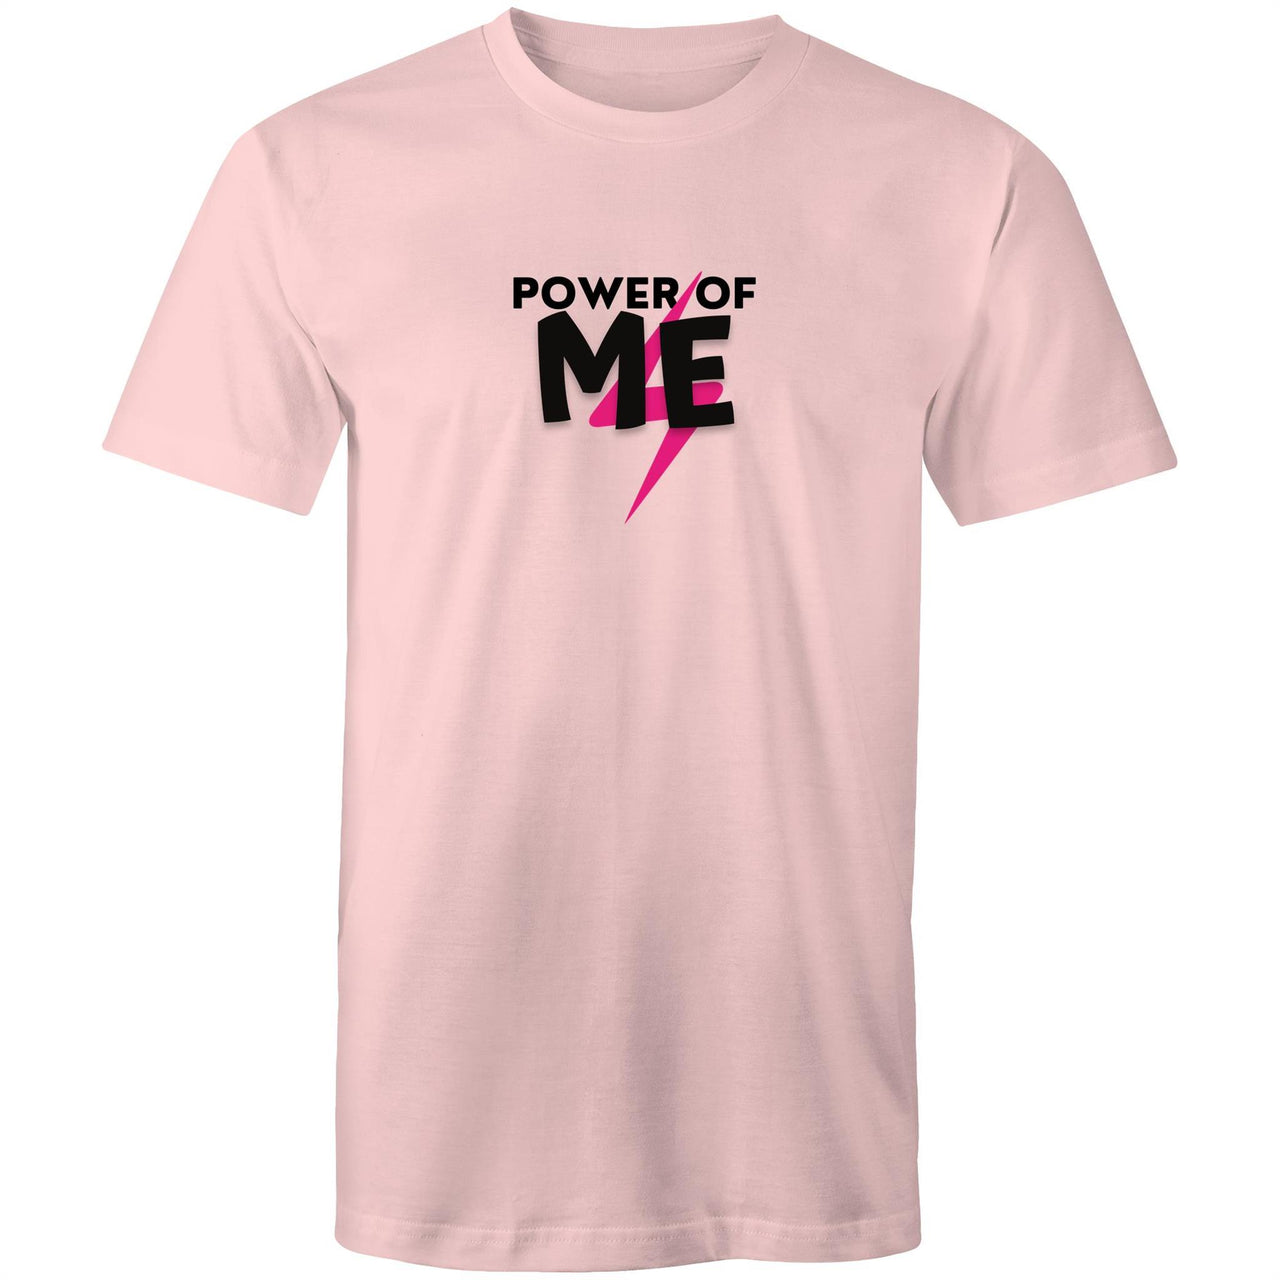 CBF Power of Me Crew T-Shirt pink by CBF Clothing